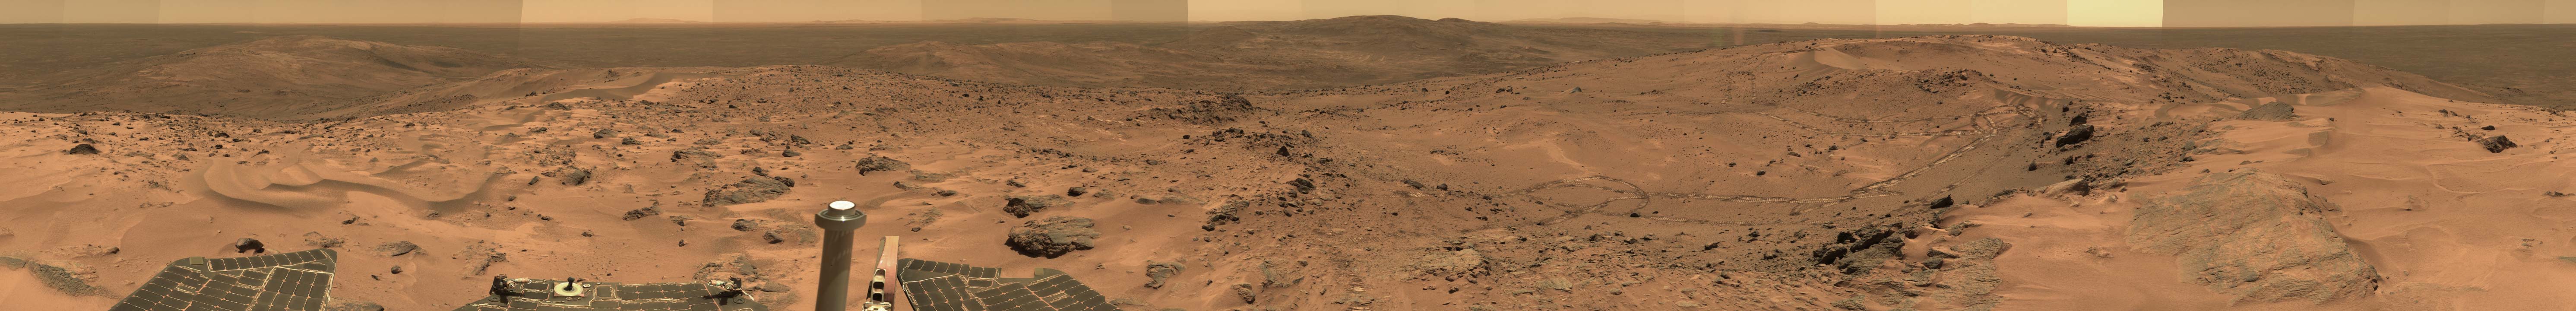 Le panorama Everest sur Mars